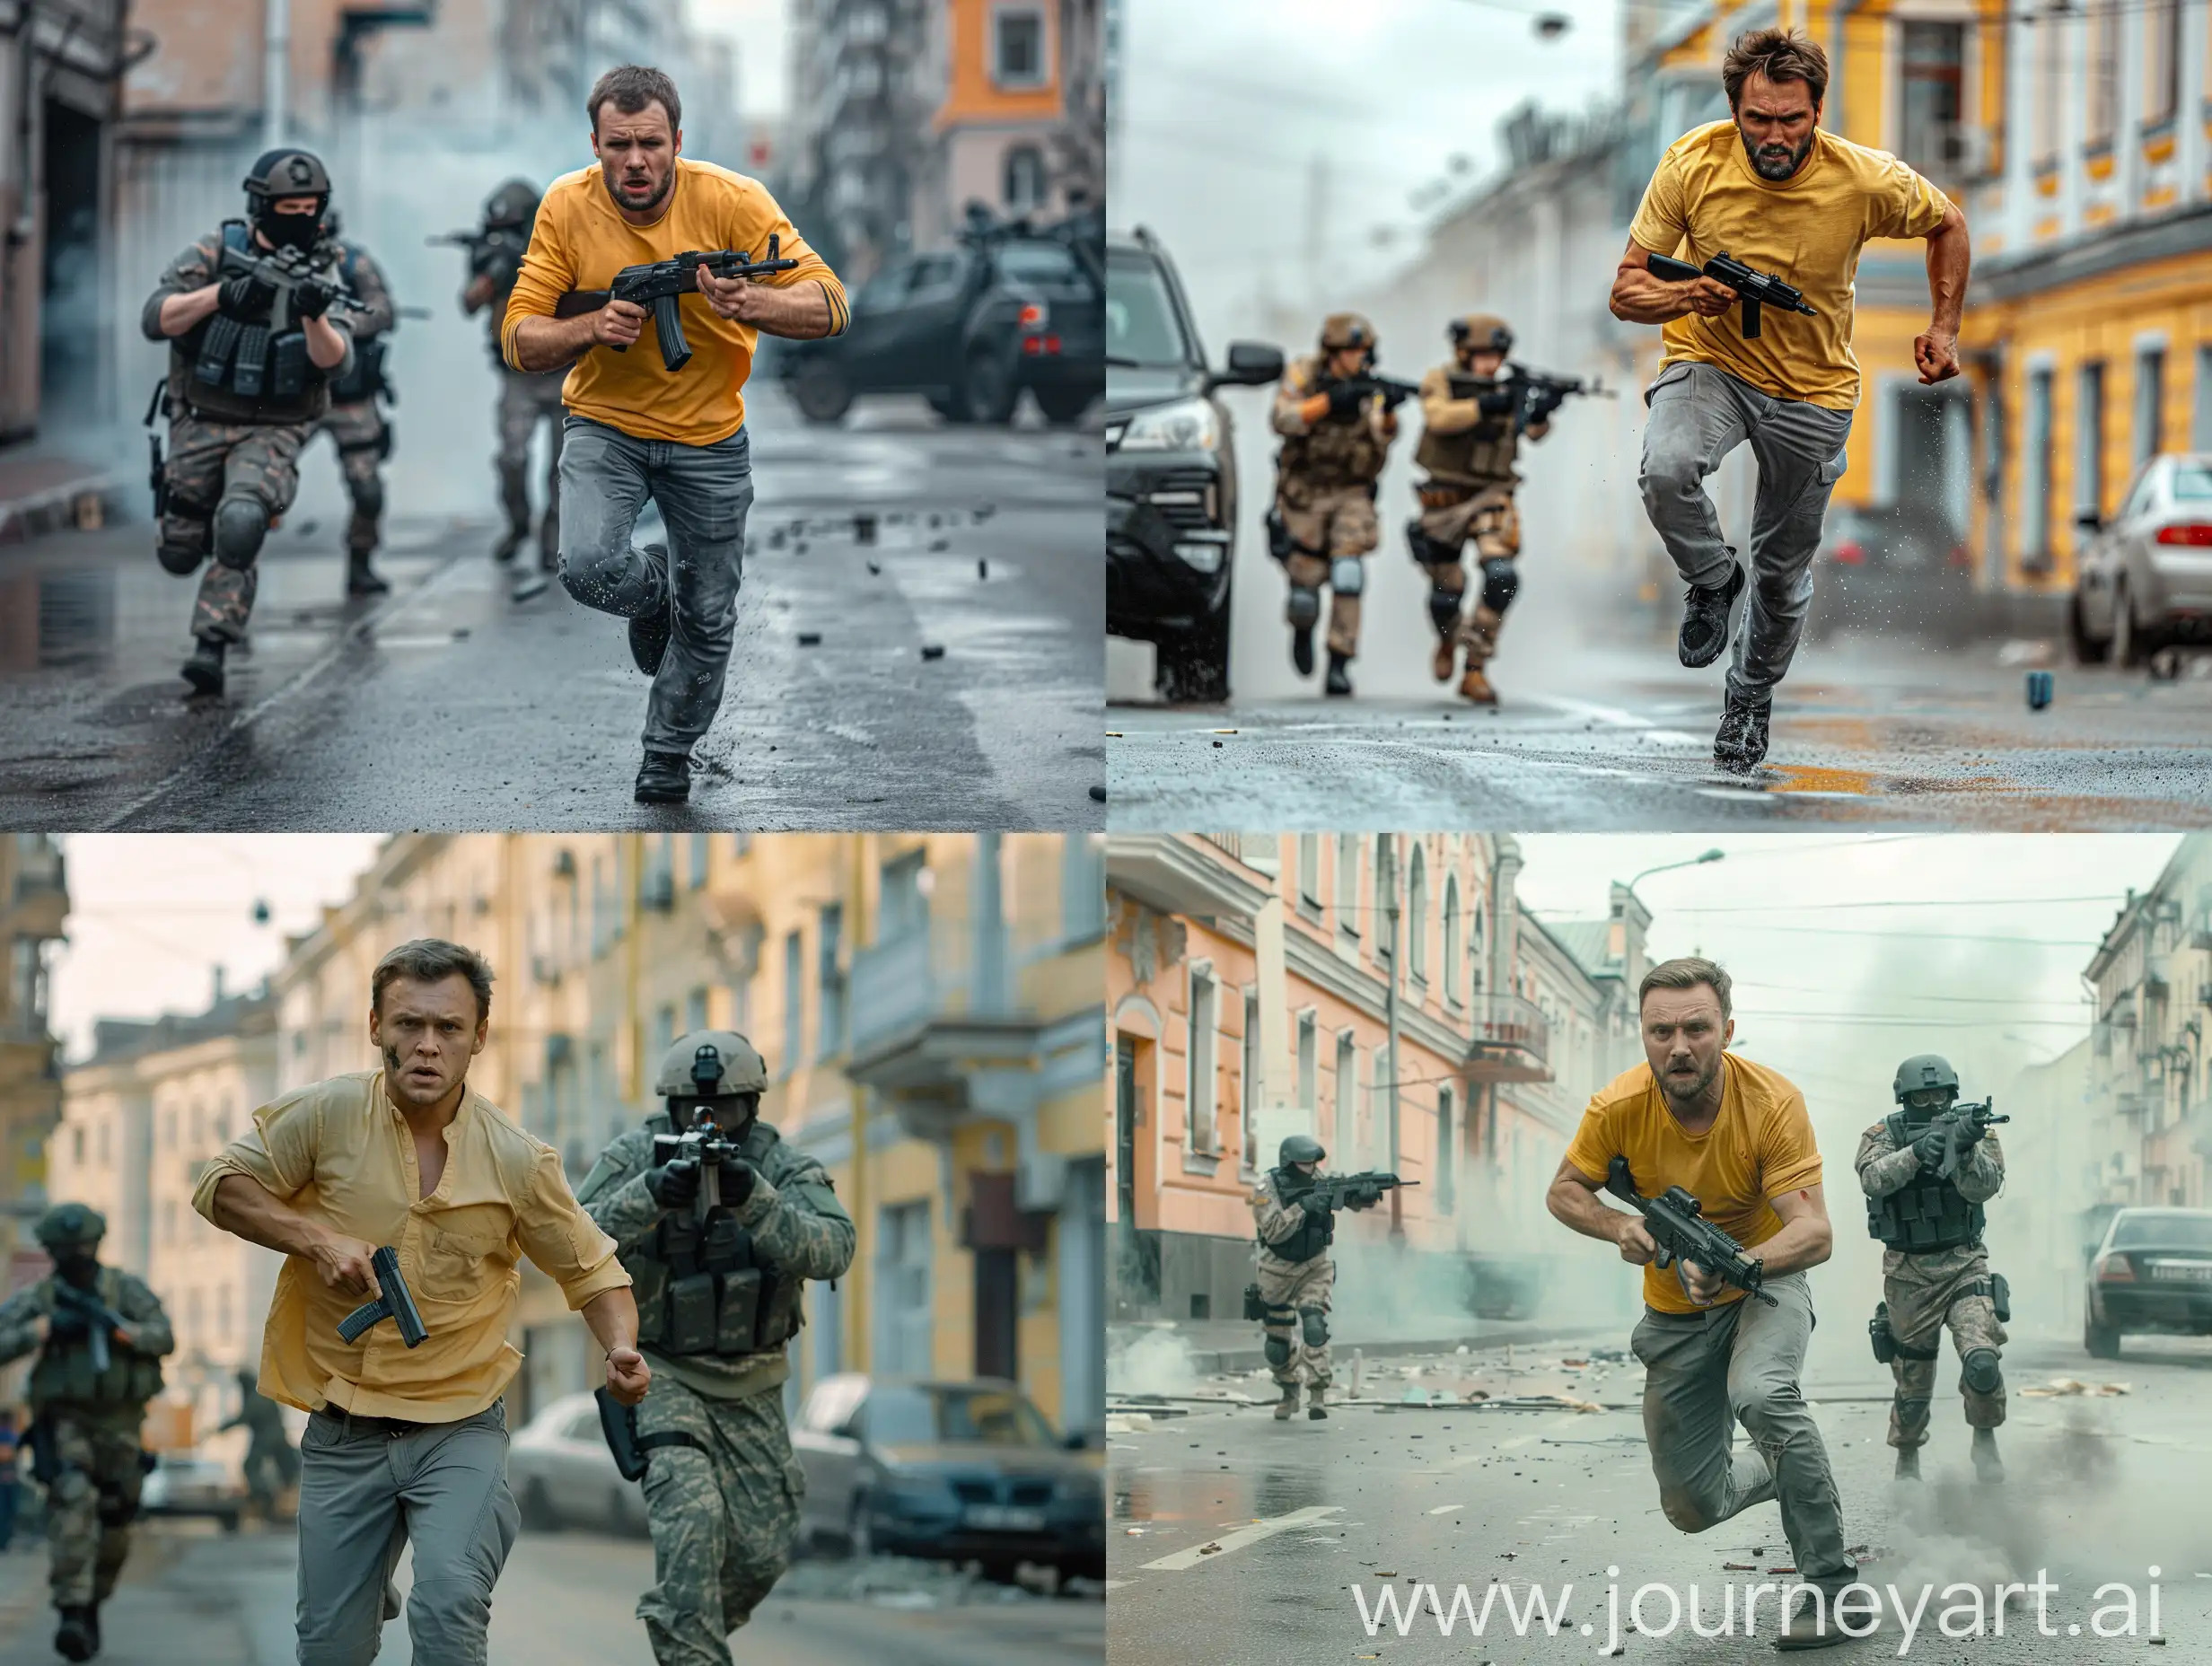 Fleeing-Man-with-TulskyTokarev-Pistol-Evades-Special-Forces-in-St-Petersburg